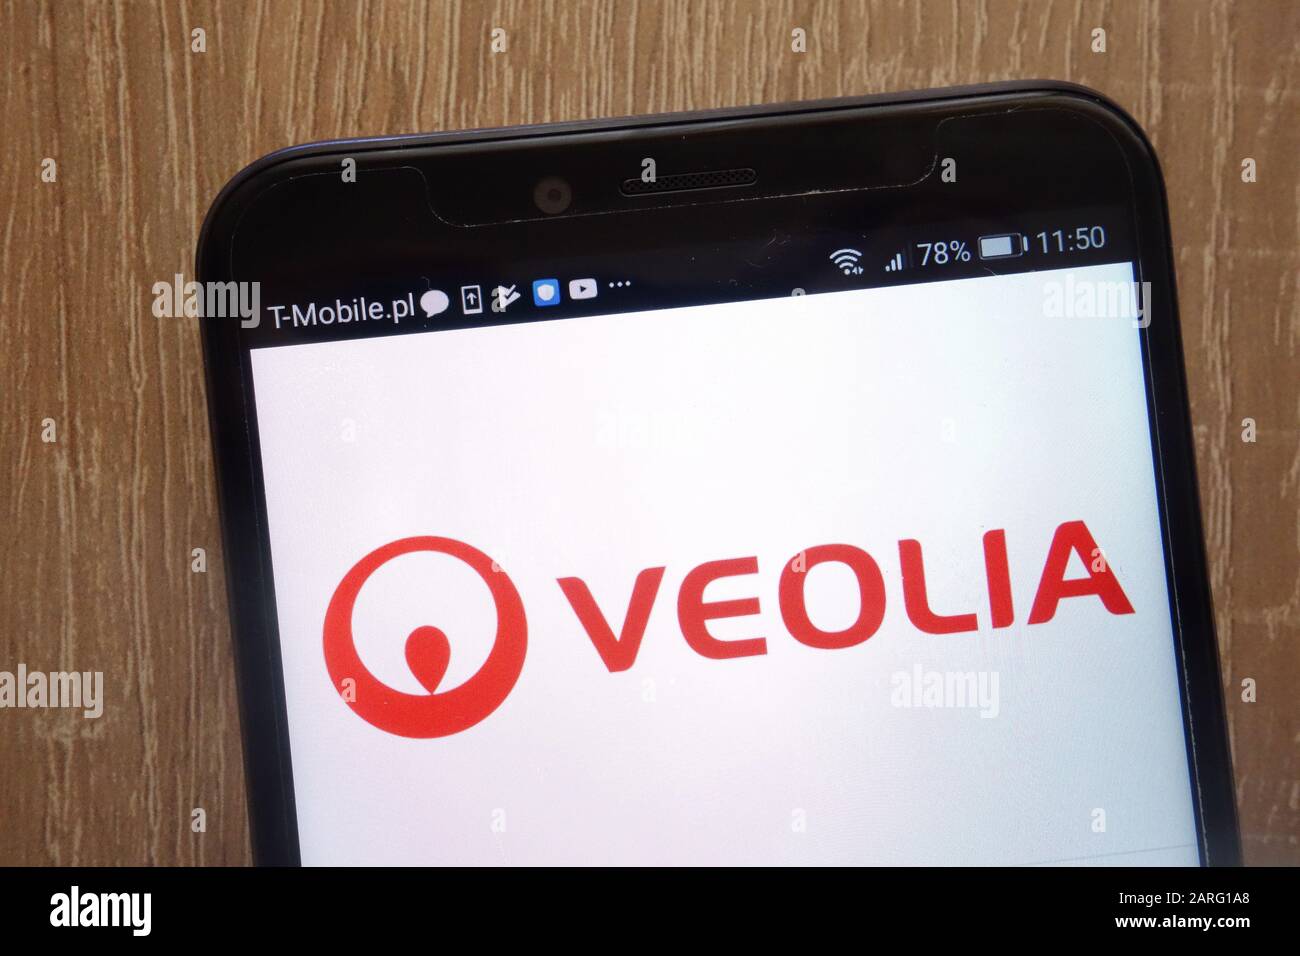 Veolia logo displayed on a modern smartphone Stock Photo